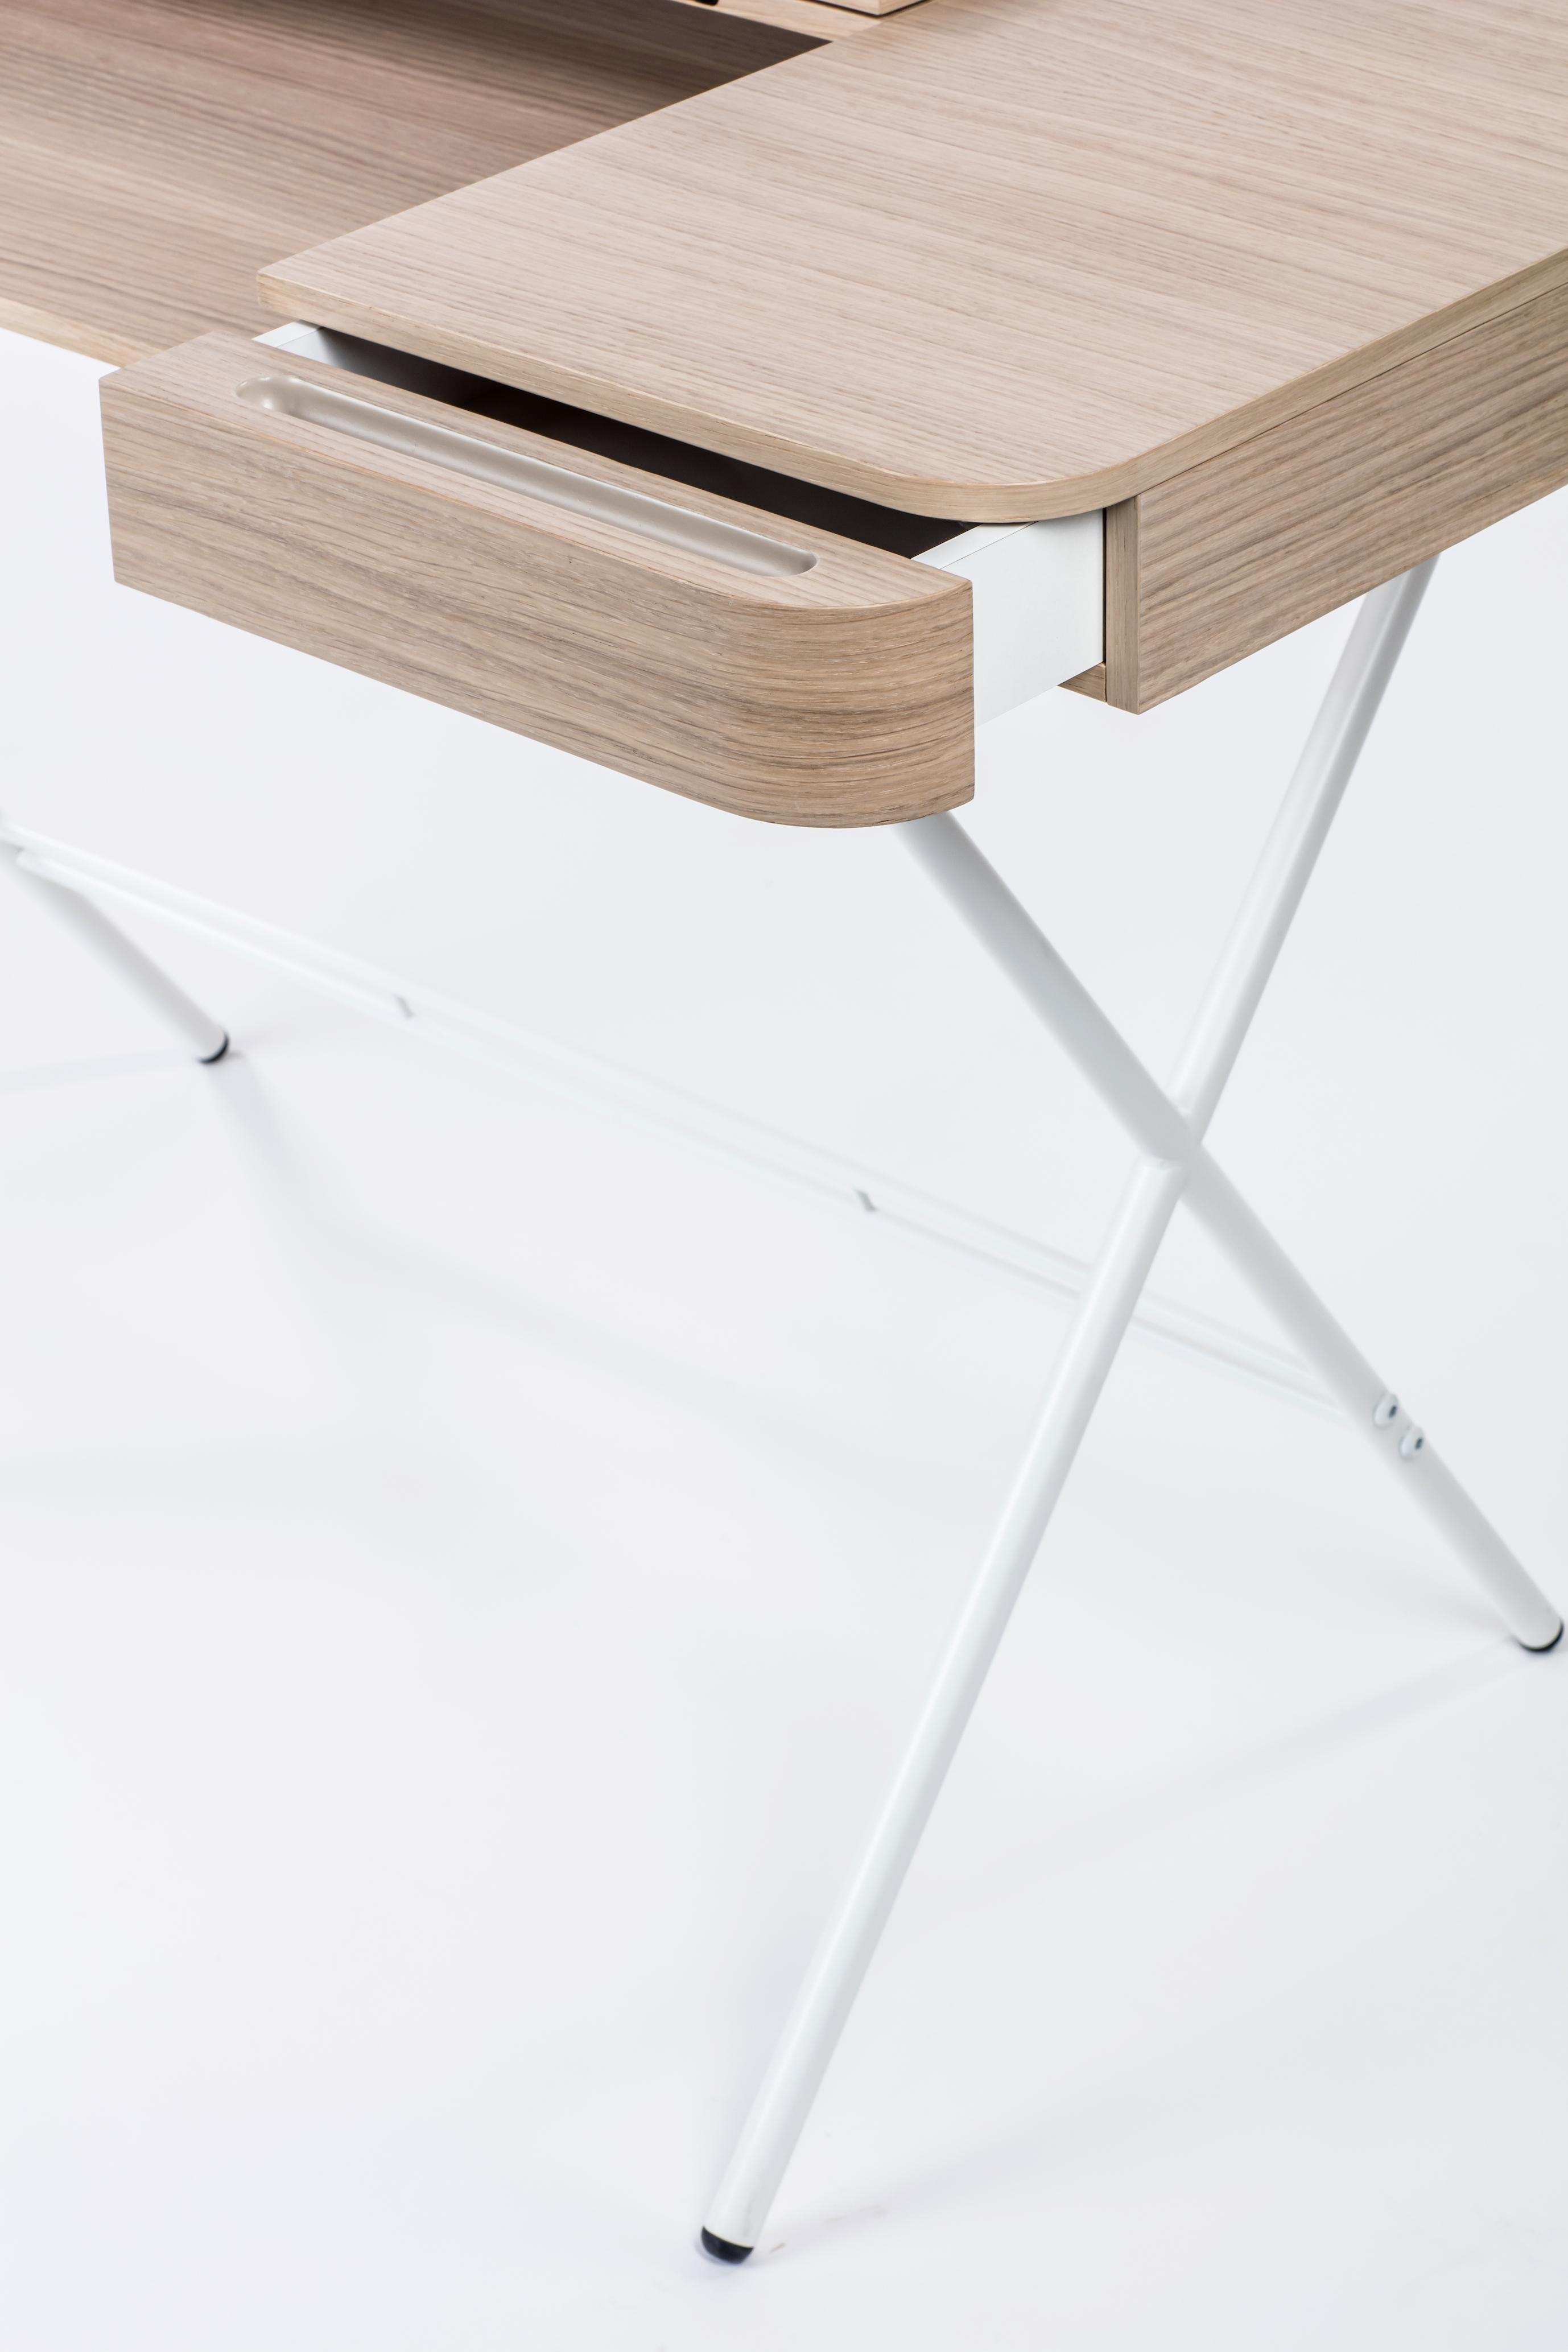 Contemporary Adentro Cosimo Desk design Marco Zanuso jr Natural oak veneer & white base.  For Sale